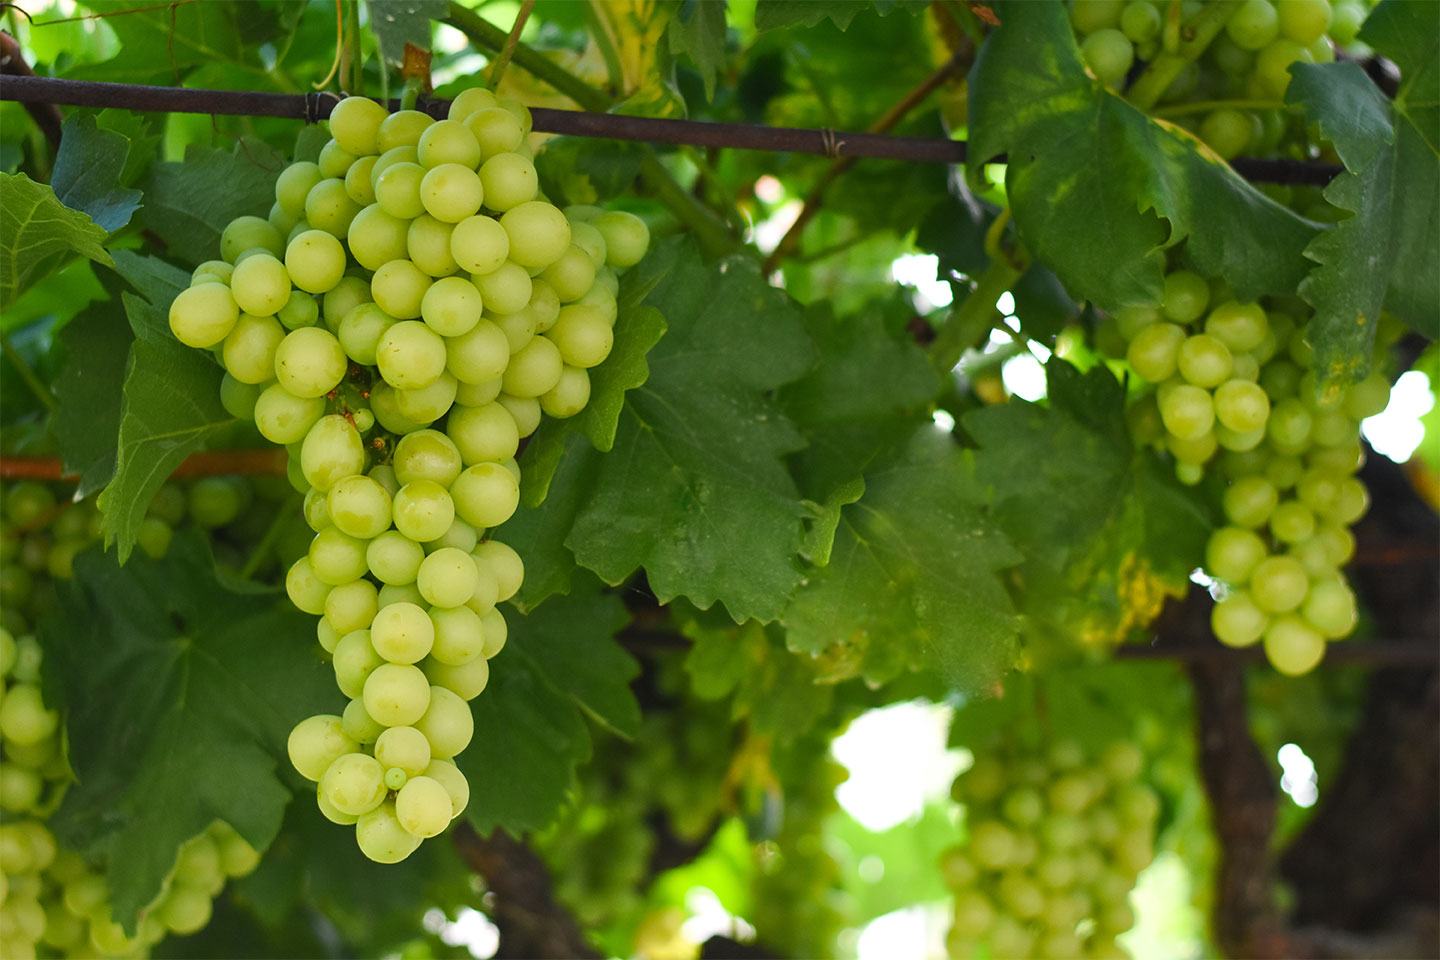 FMC Good to Grow grapevine trunk disease